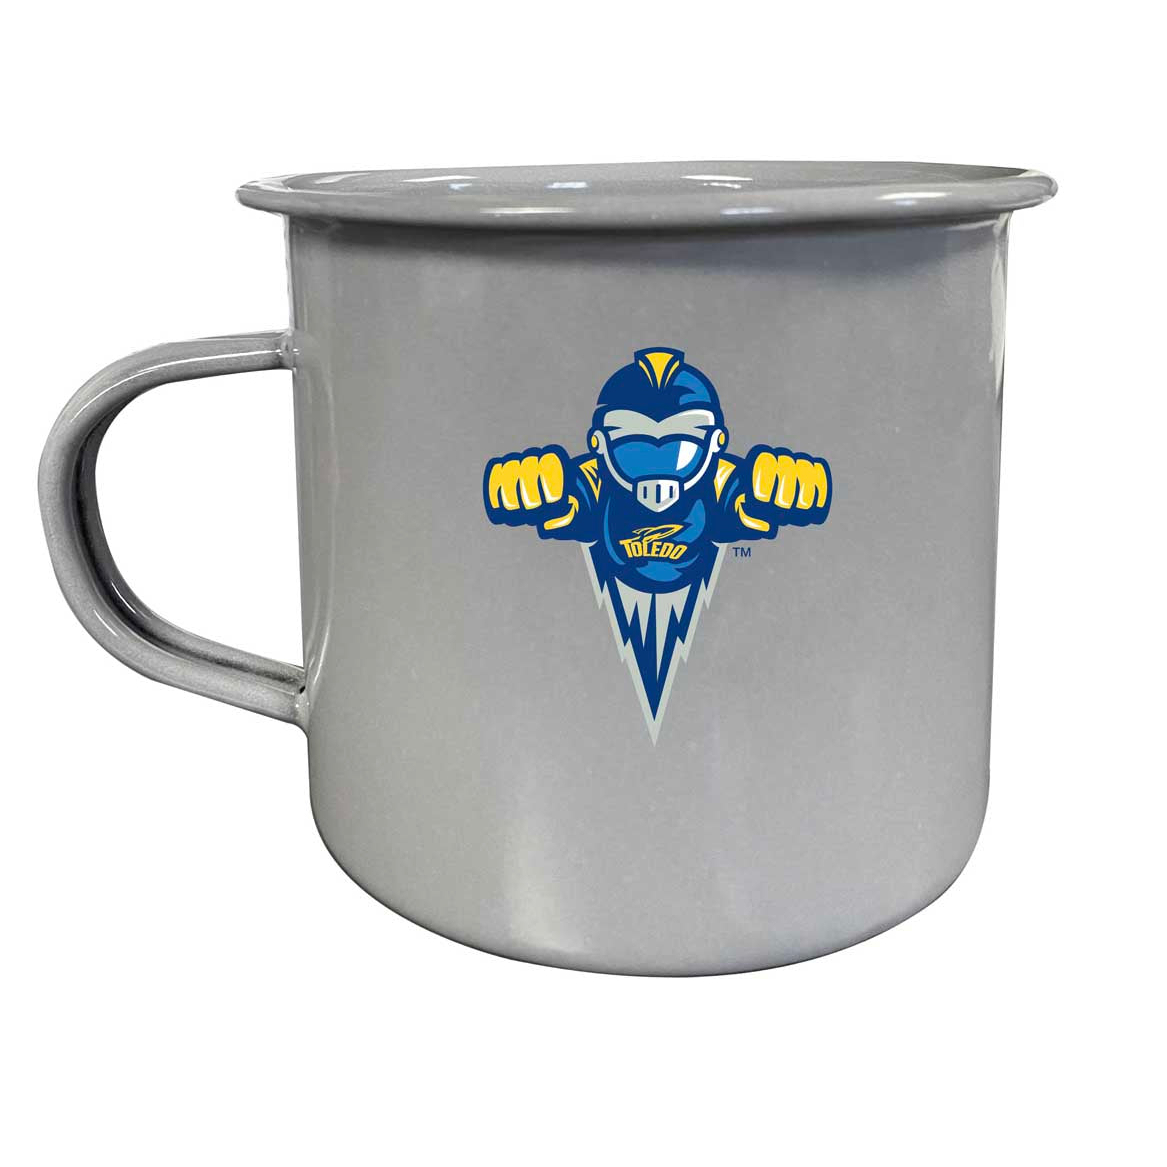 Toledo Rockets Tin Camper Coffee Mug - Choose Your Color - White